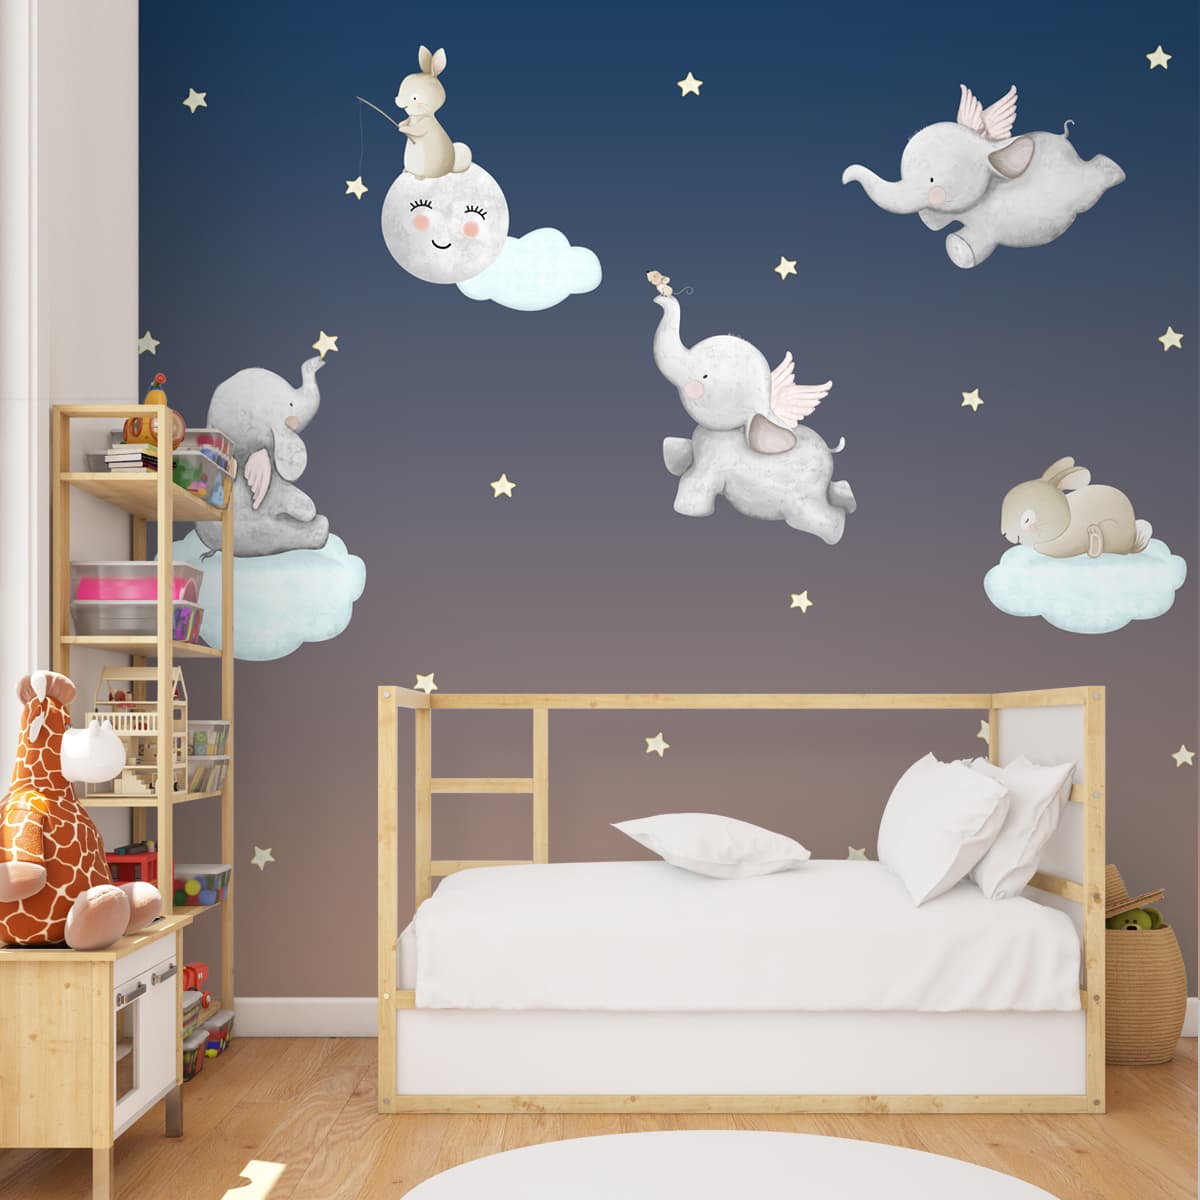 Cute Elephants and Bunnies in Nursery Kids Room Wallpaper